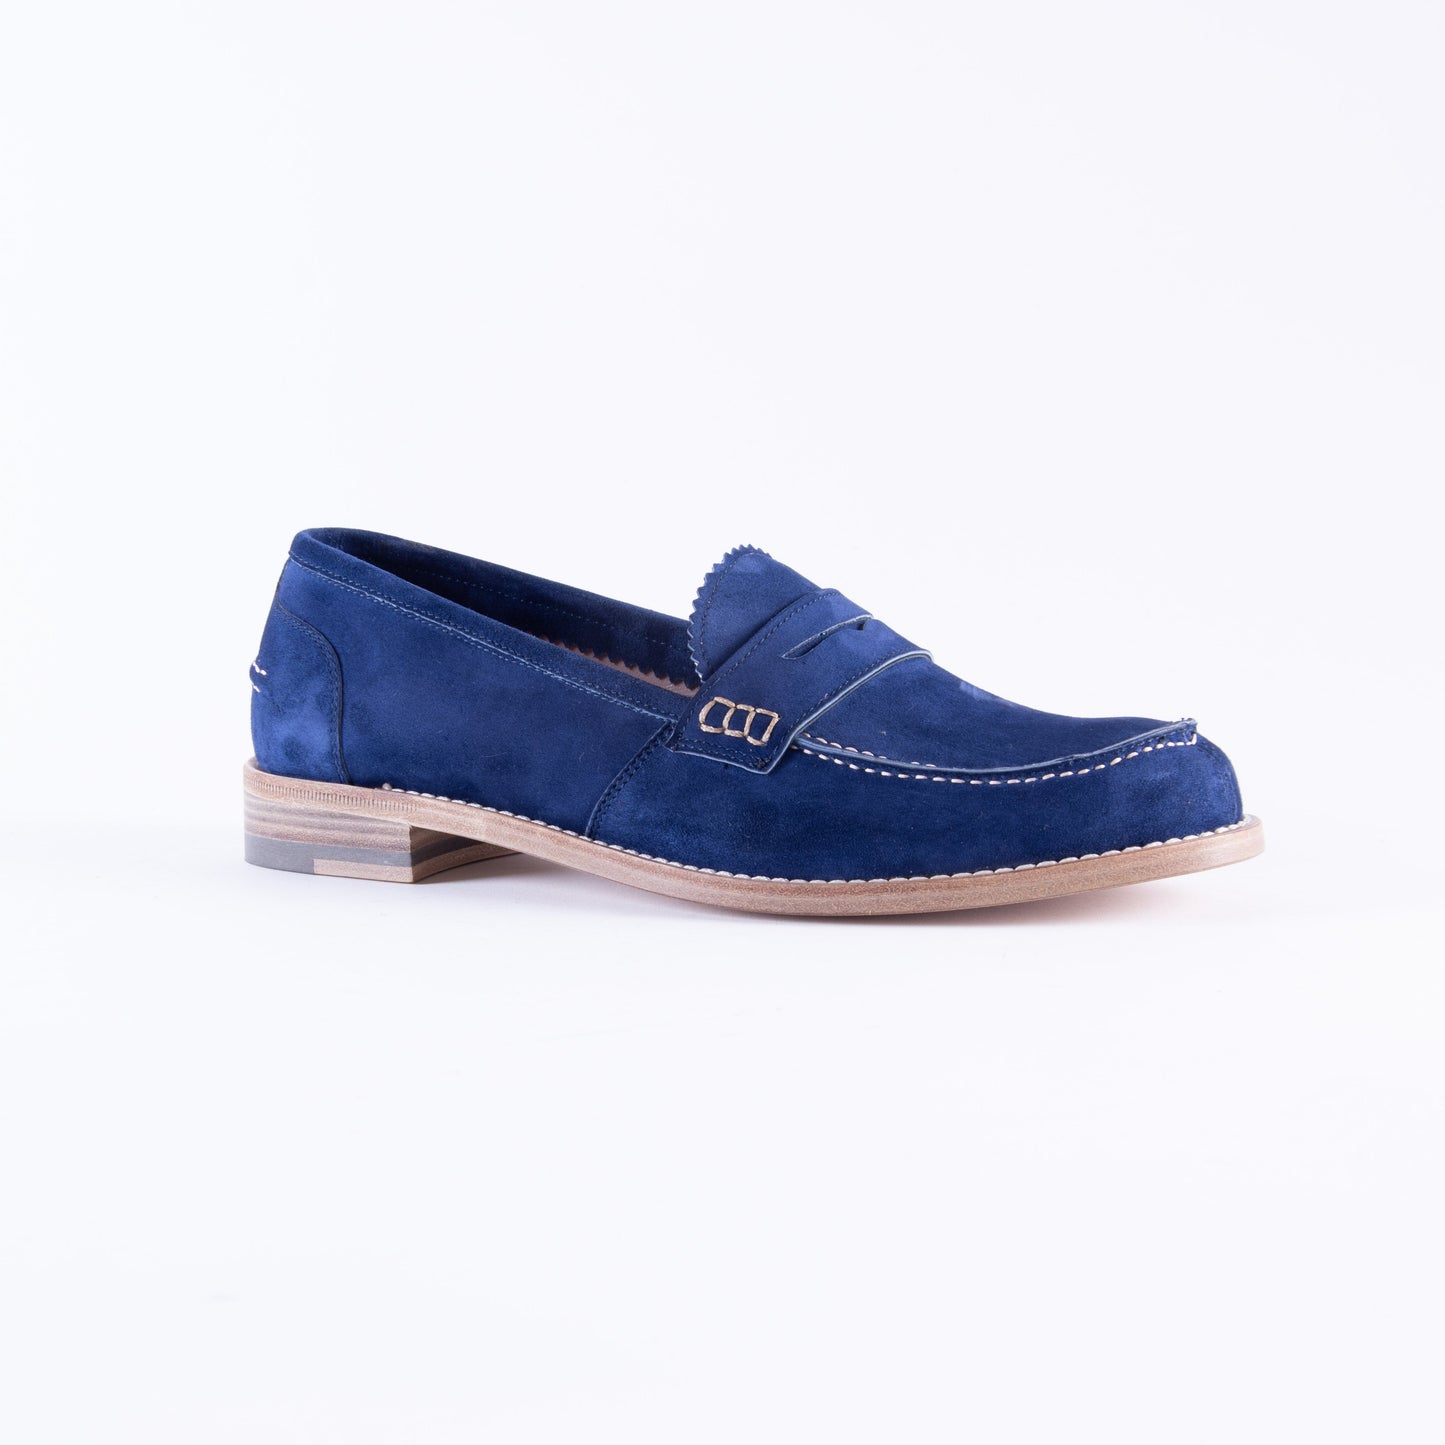 Loafer in soft blue suede